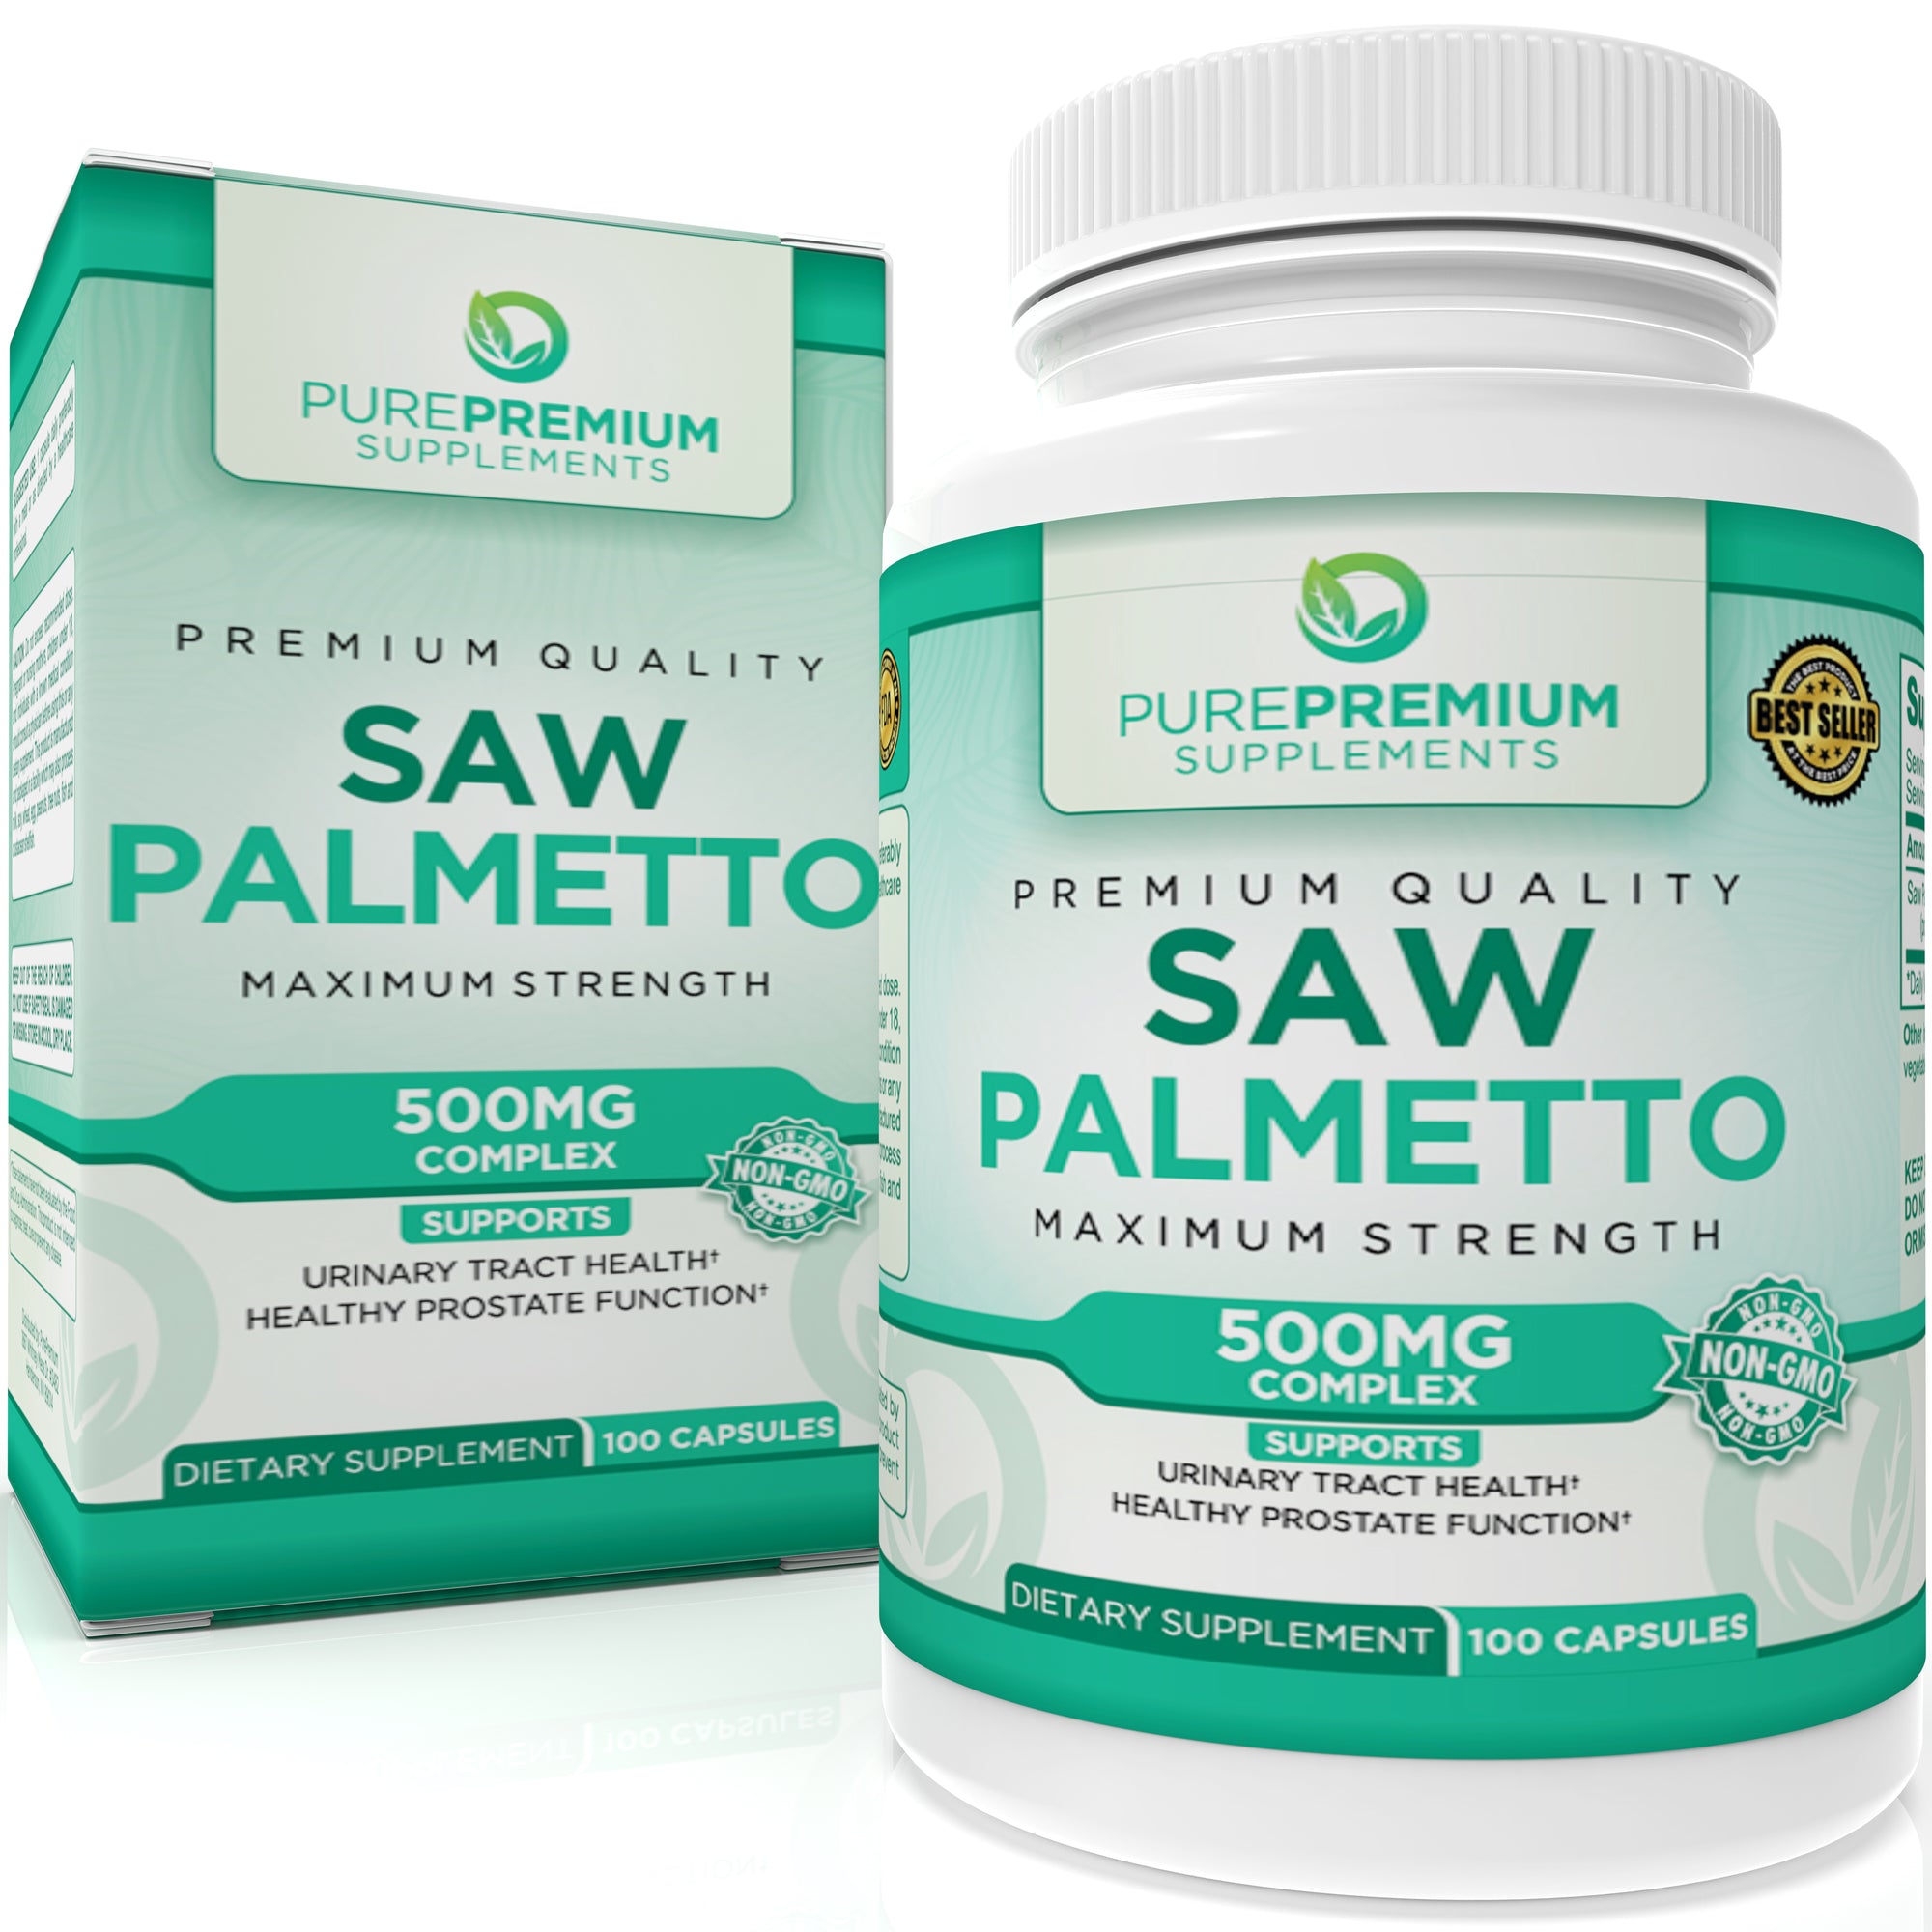 Premium Saw Palmetto Supplement